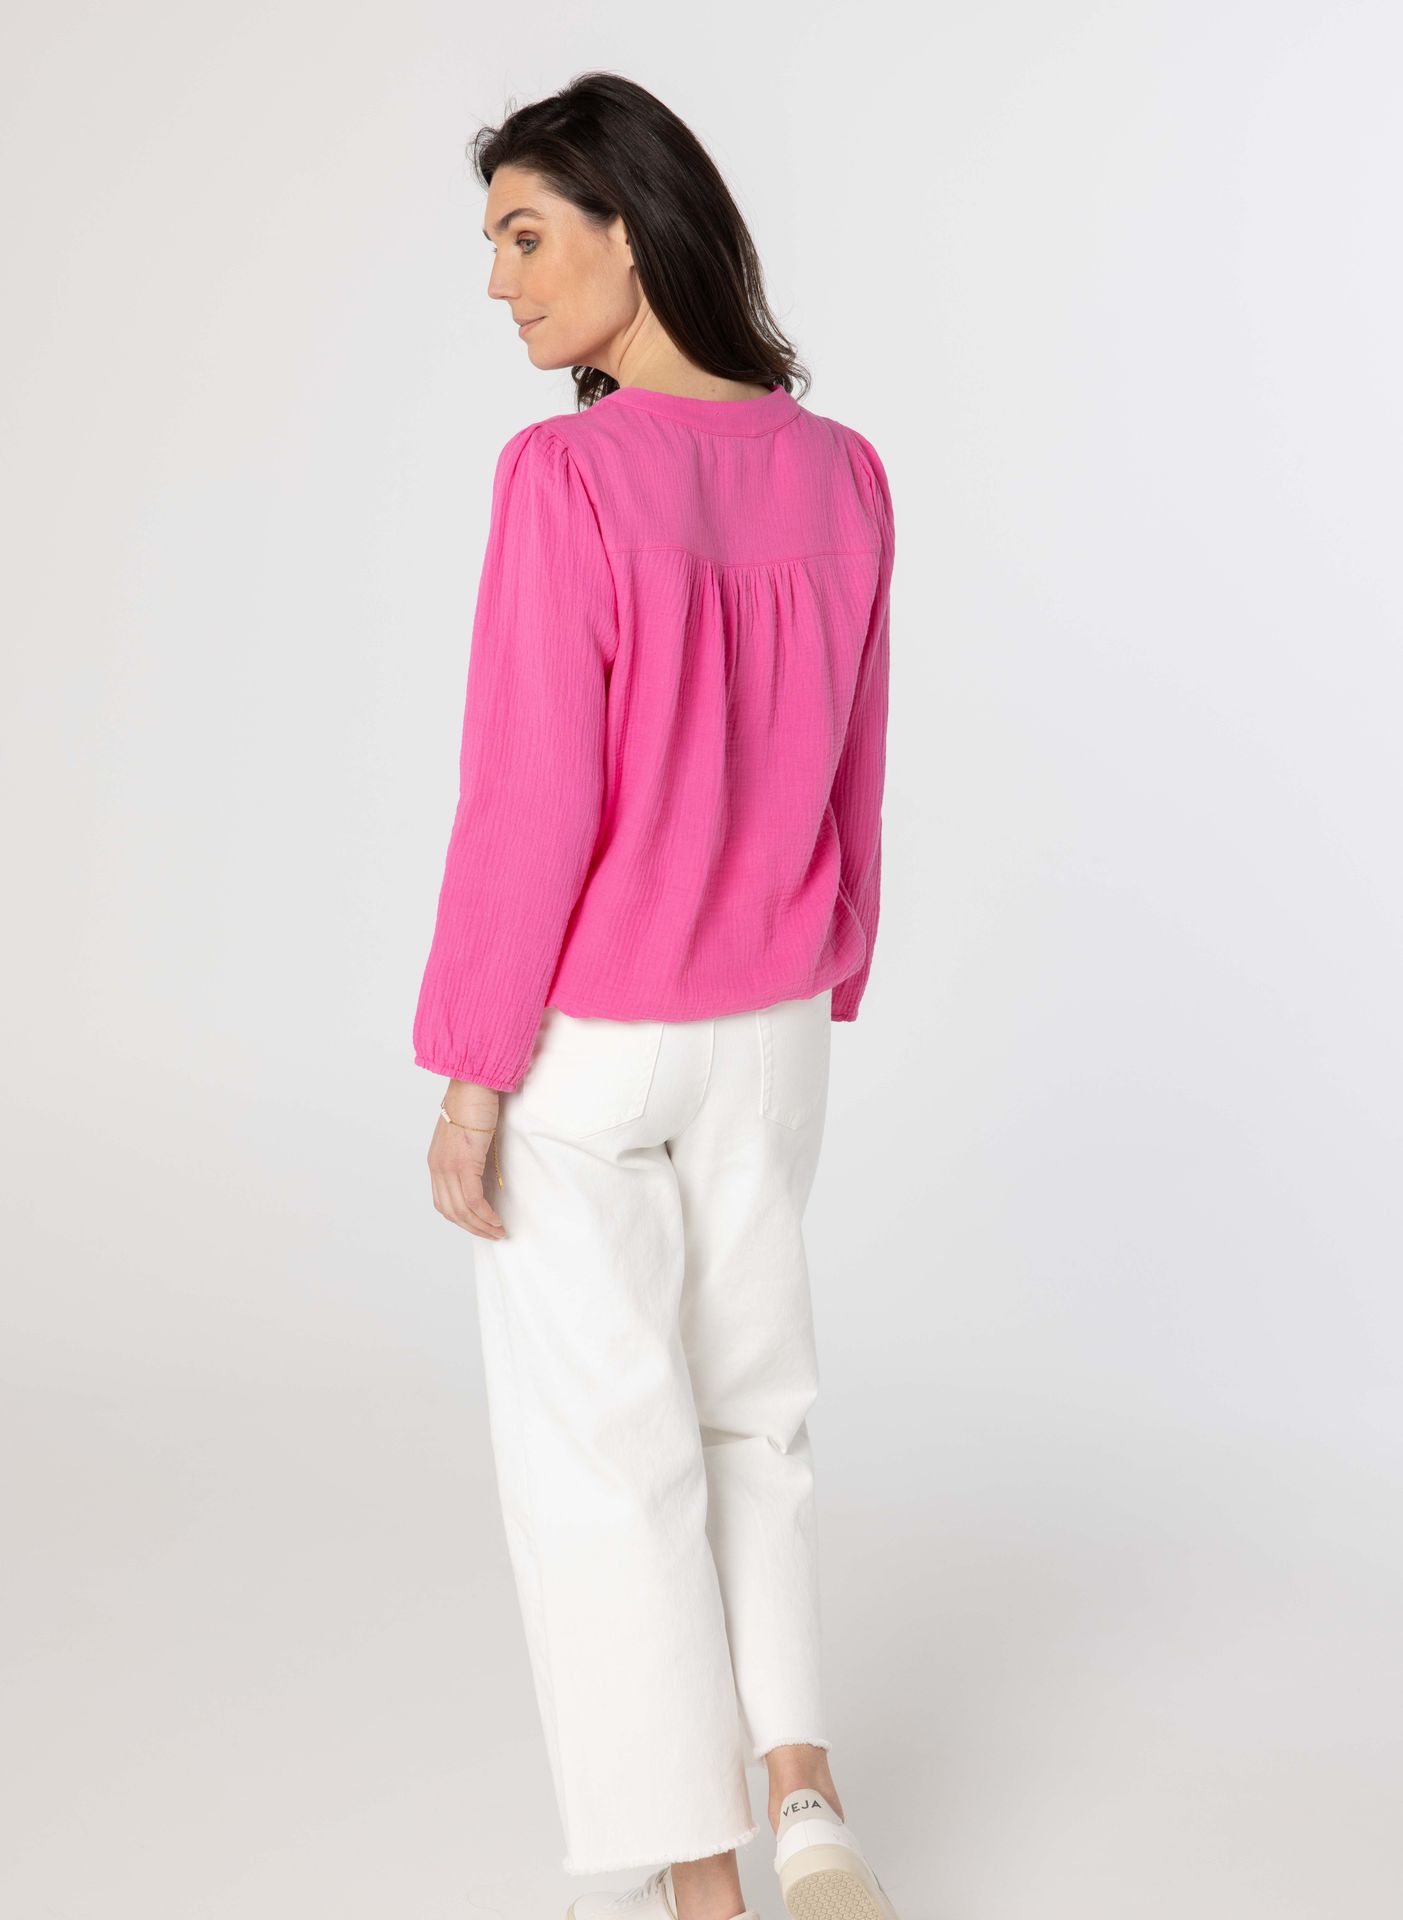 Norah Roze blouse van katoen pink 213404-900